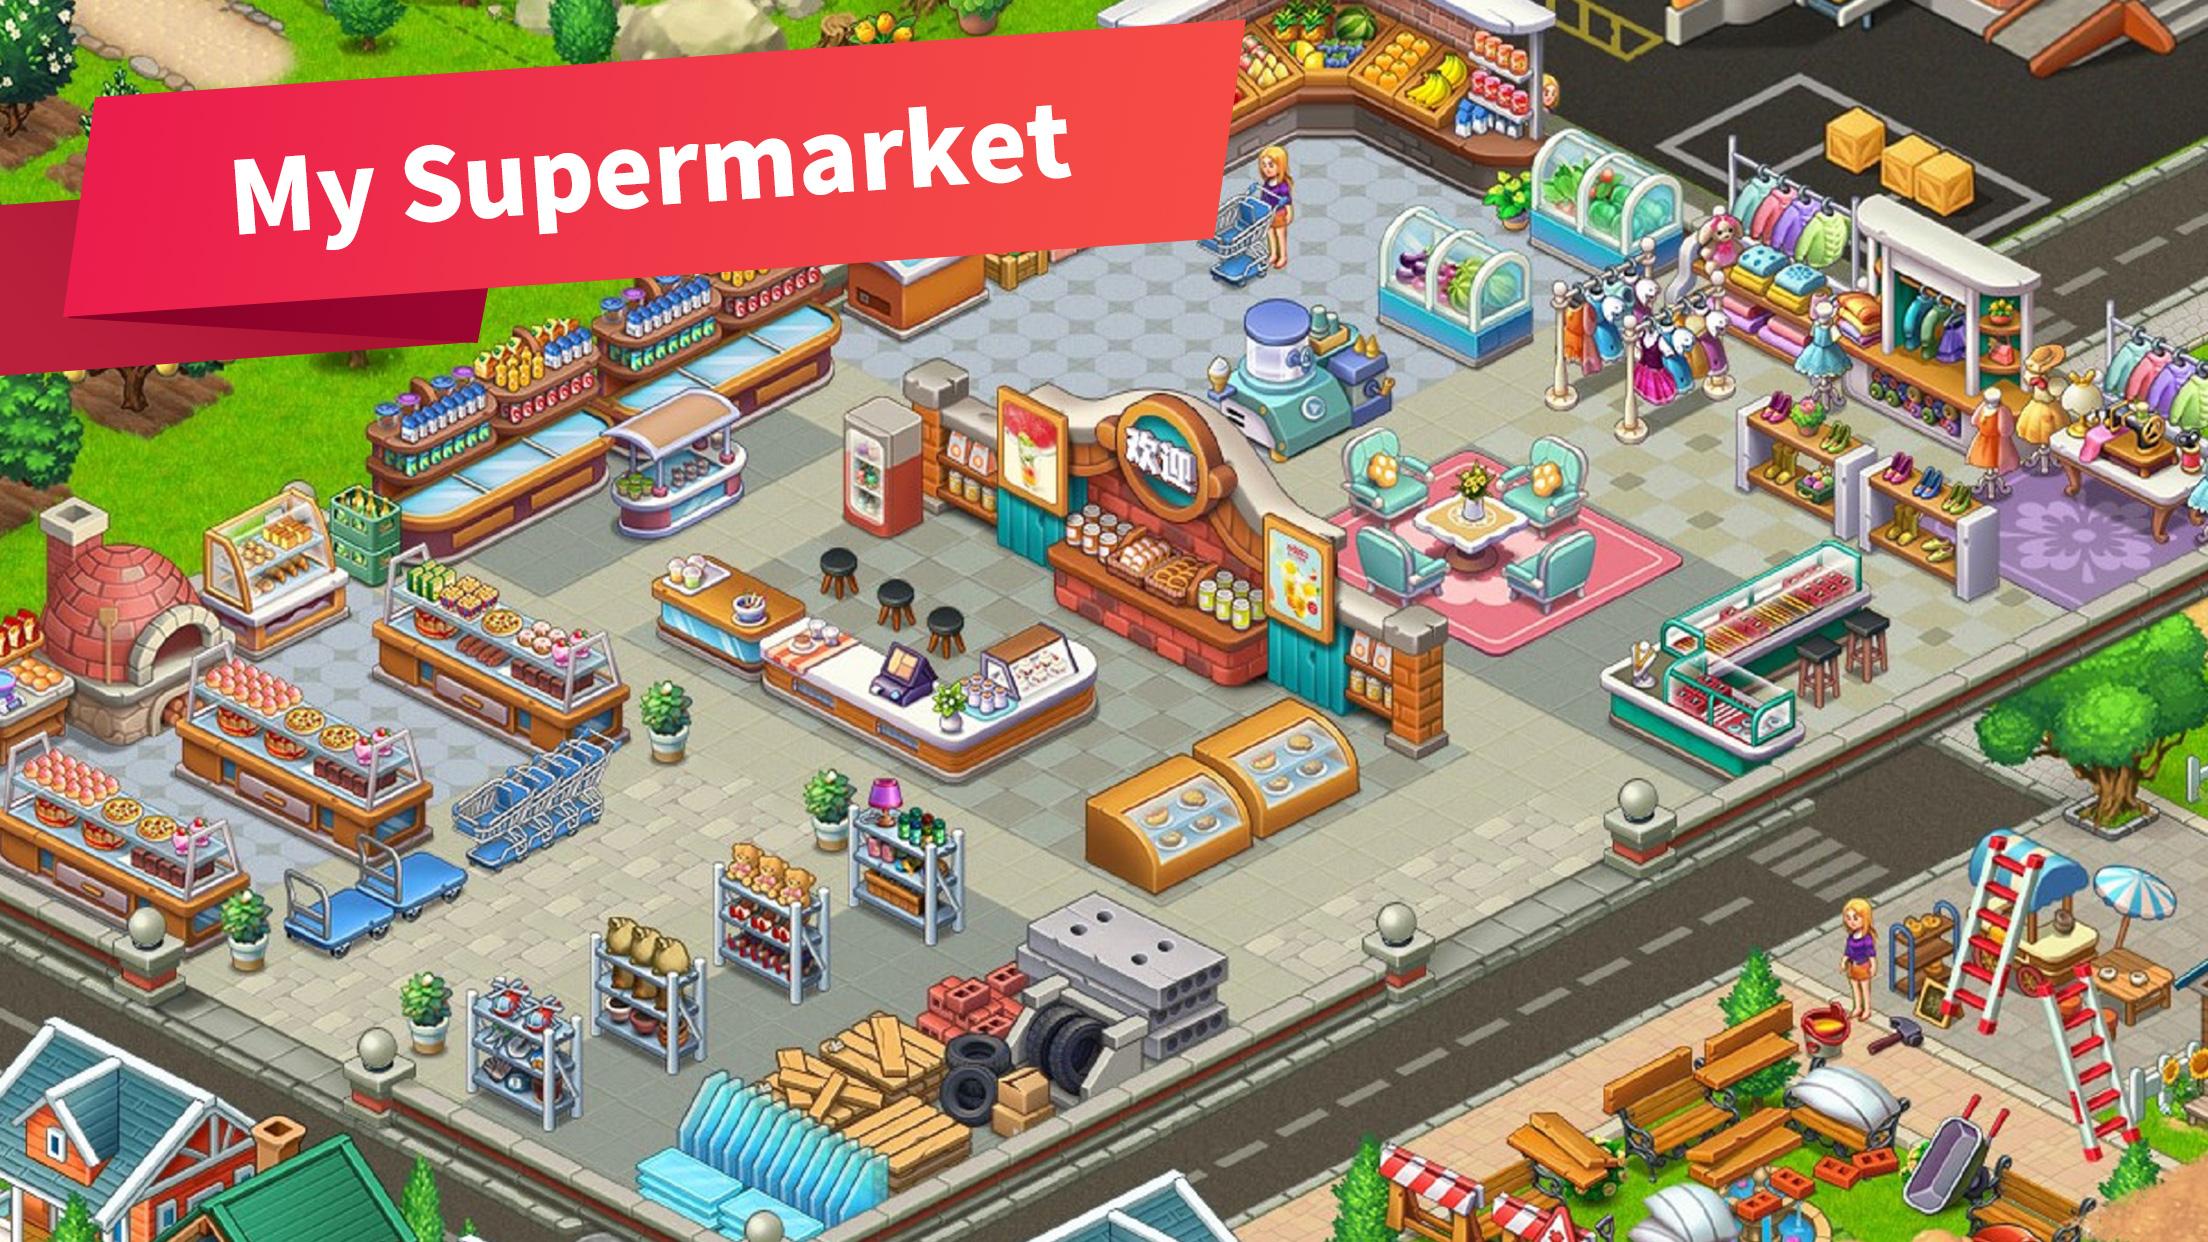 Магнат супермаркетов магазин игра. Супермаркет Tycoon. Мой супермаркет игра. Супермаркет симулятор с улицы. Супермаркет симулятор мир.